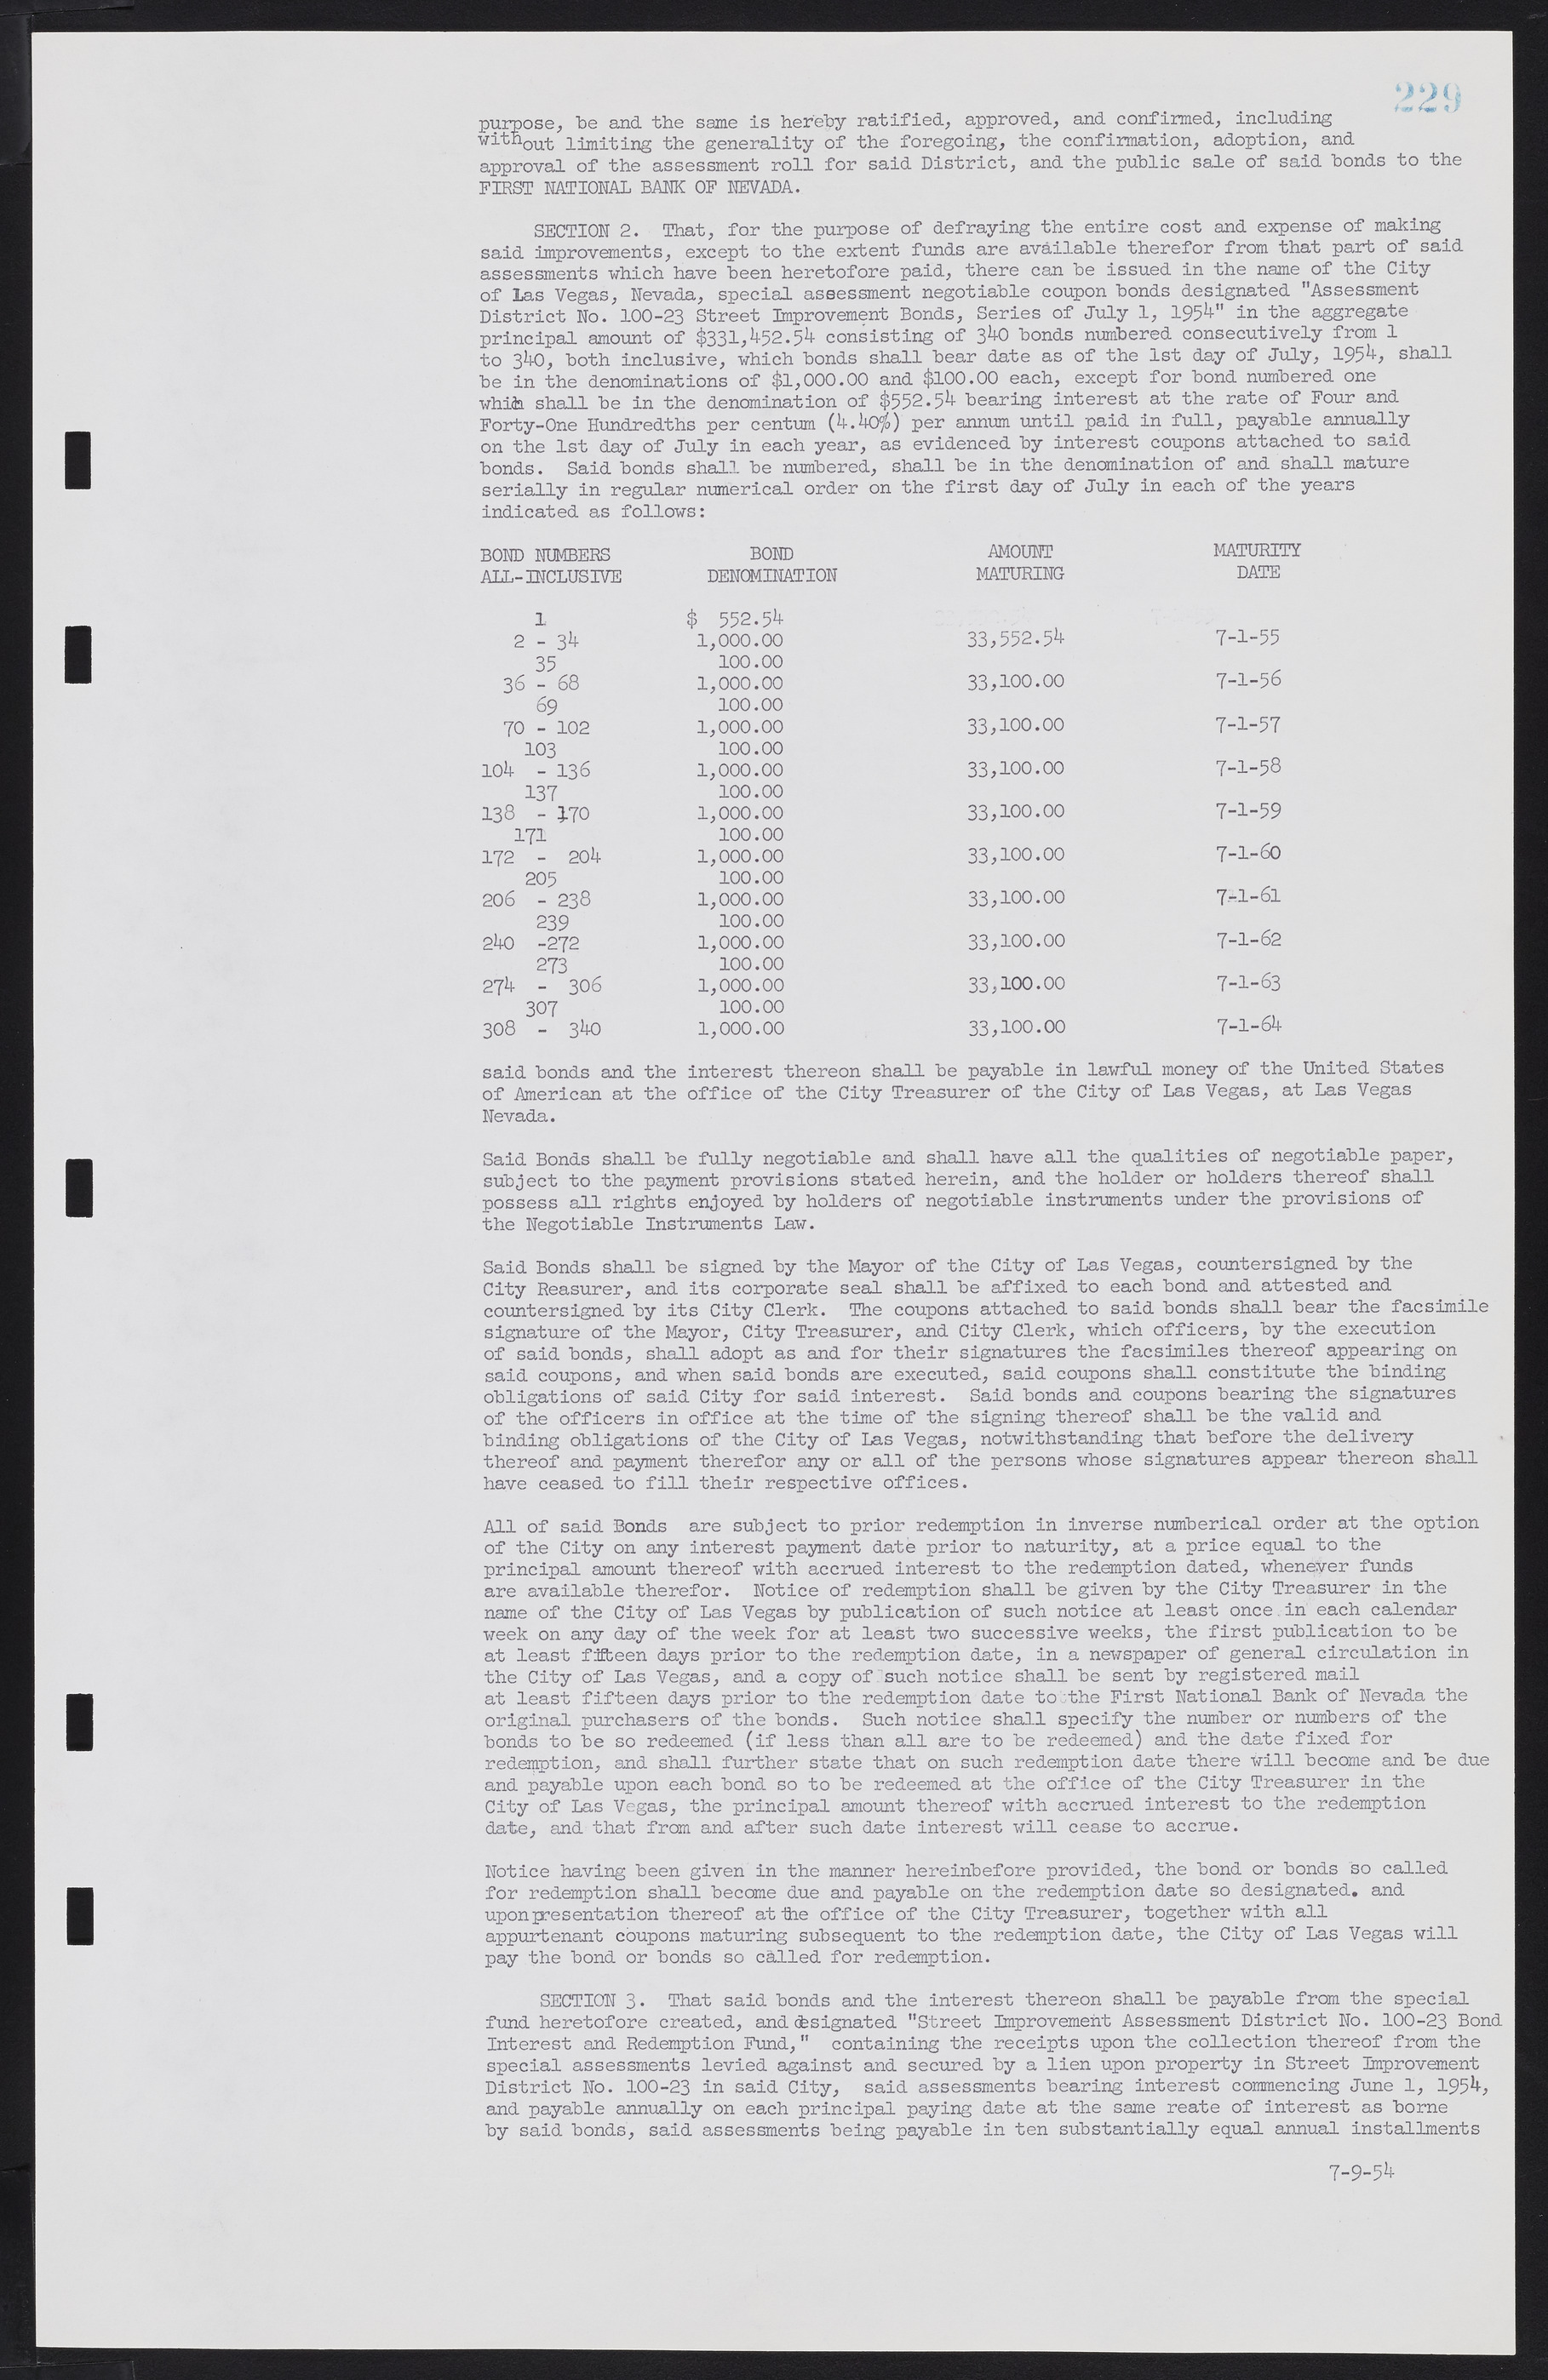 Las Vegas City Commission Minutes, February 17, 1954 to September 21, 1955, lvc000009-235